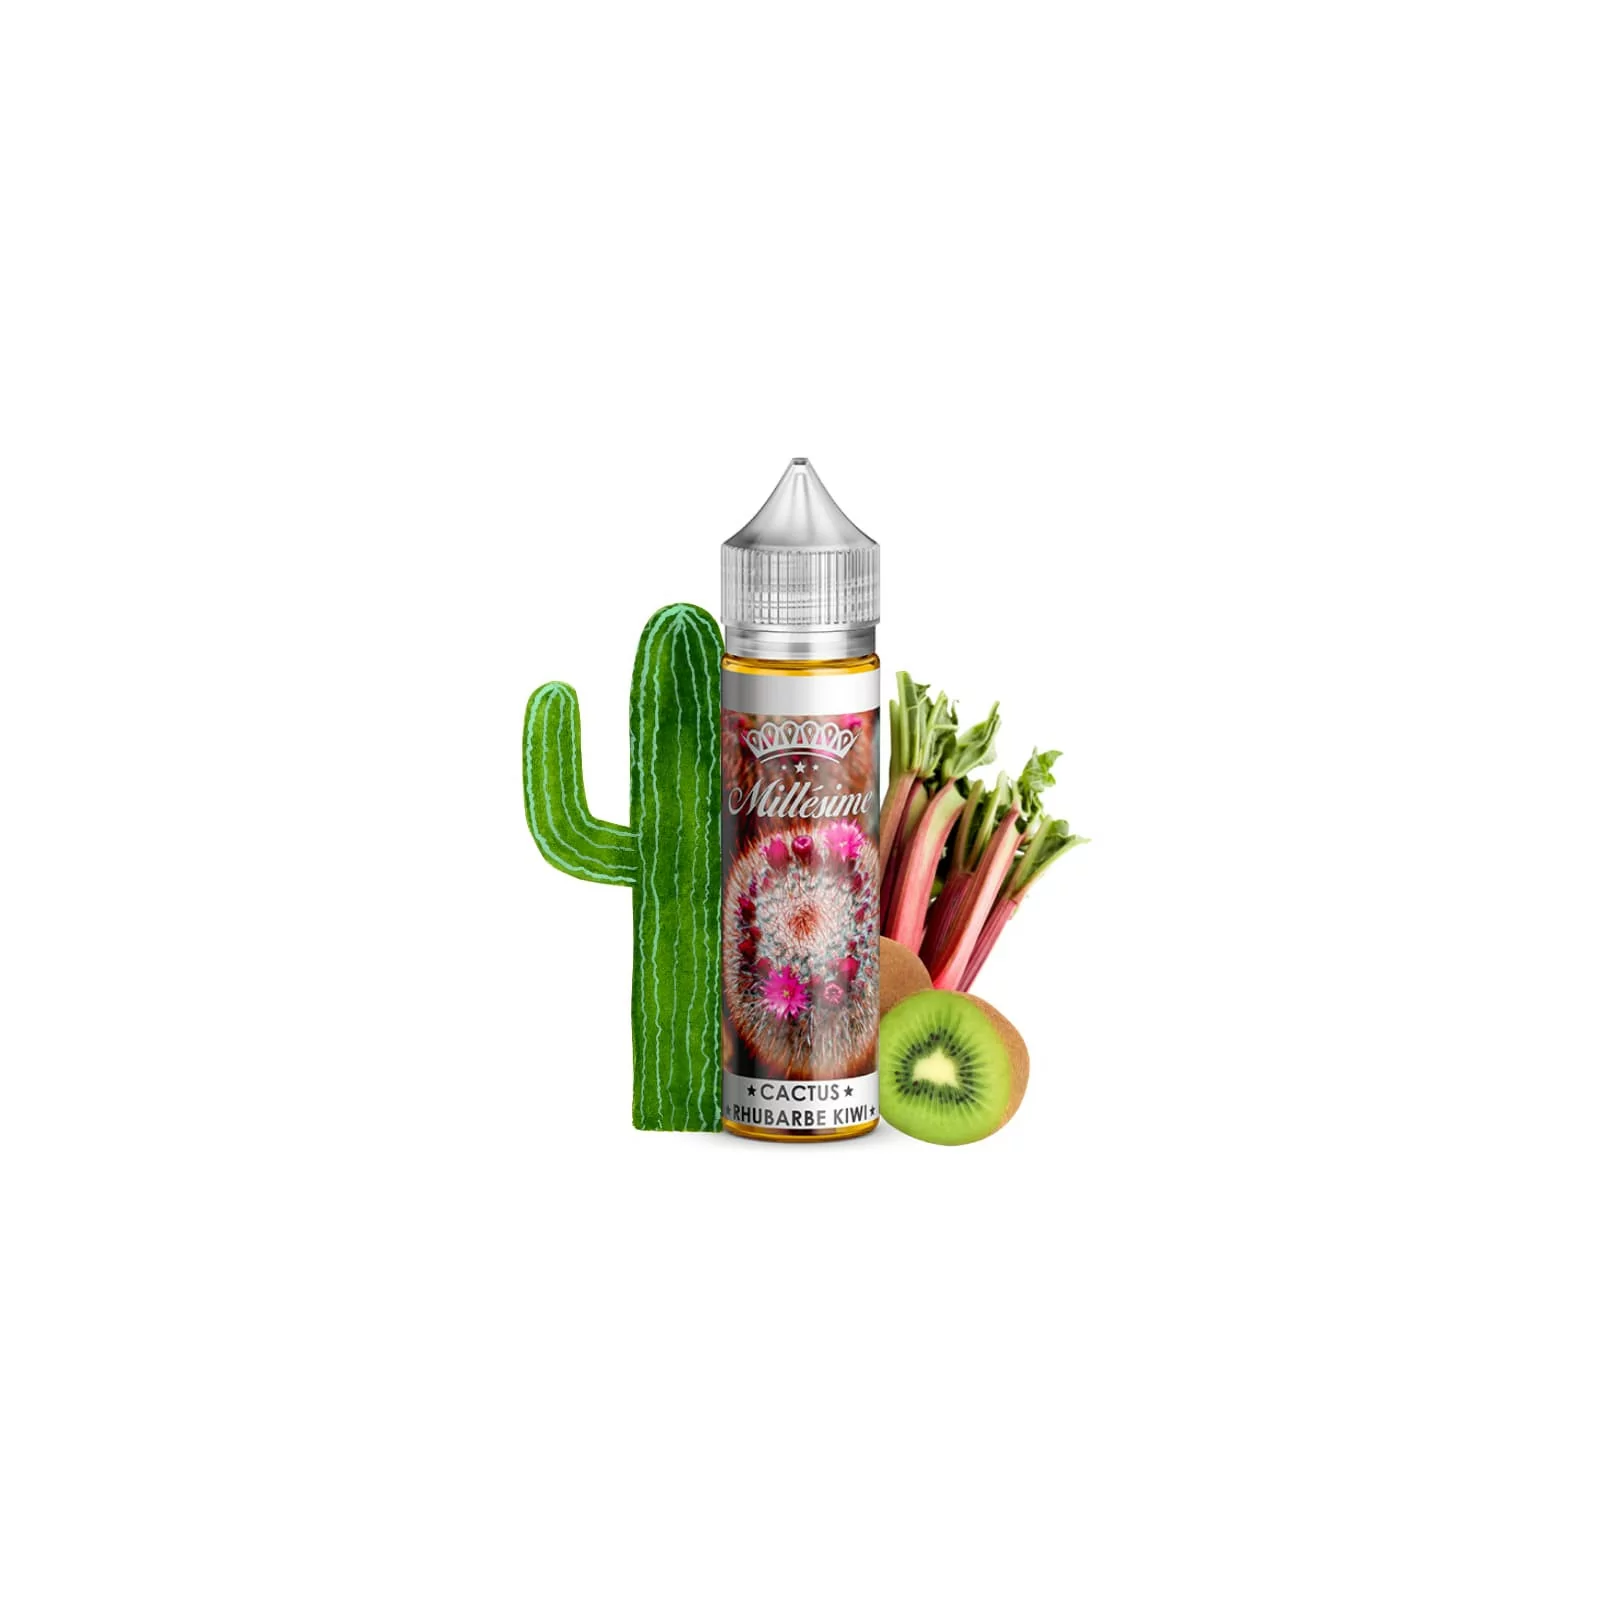 Cactus Rhubarbe Kiwi 50ML  - Millésime